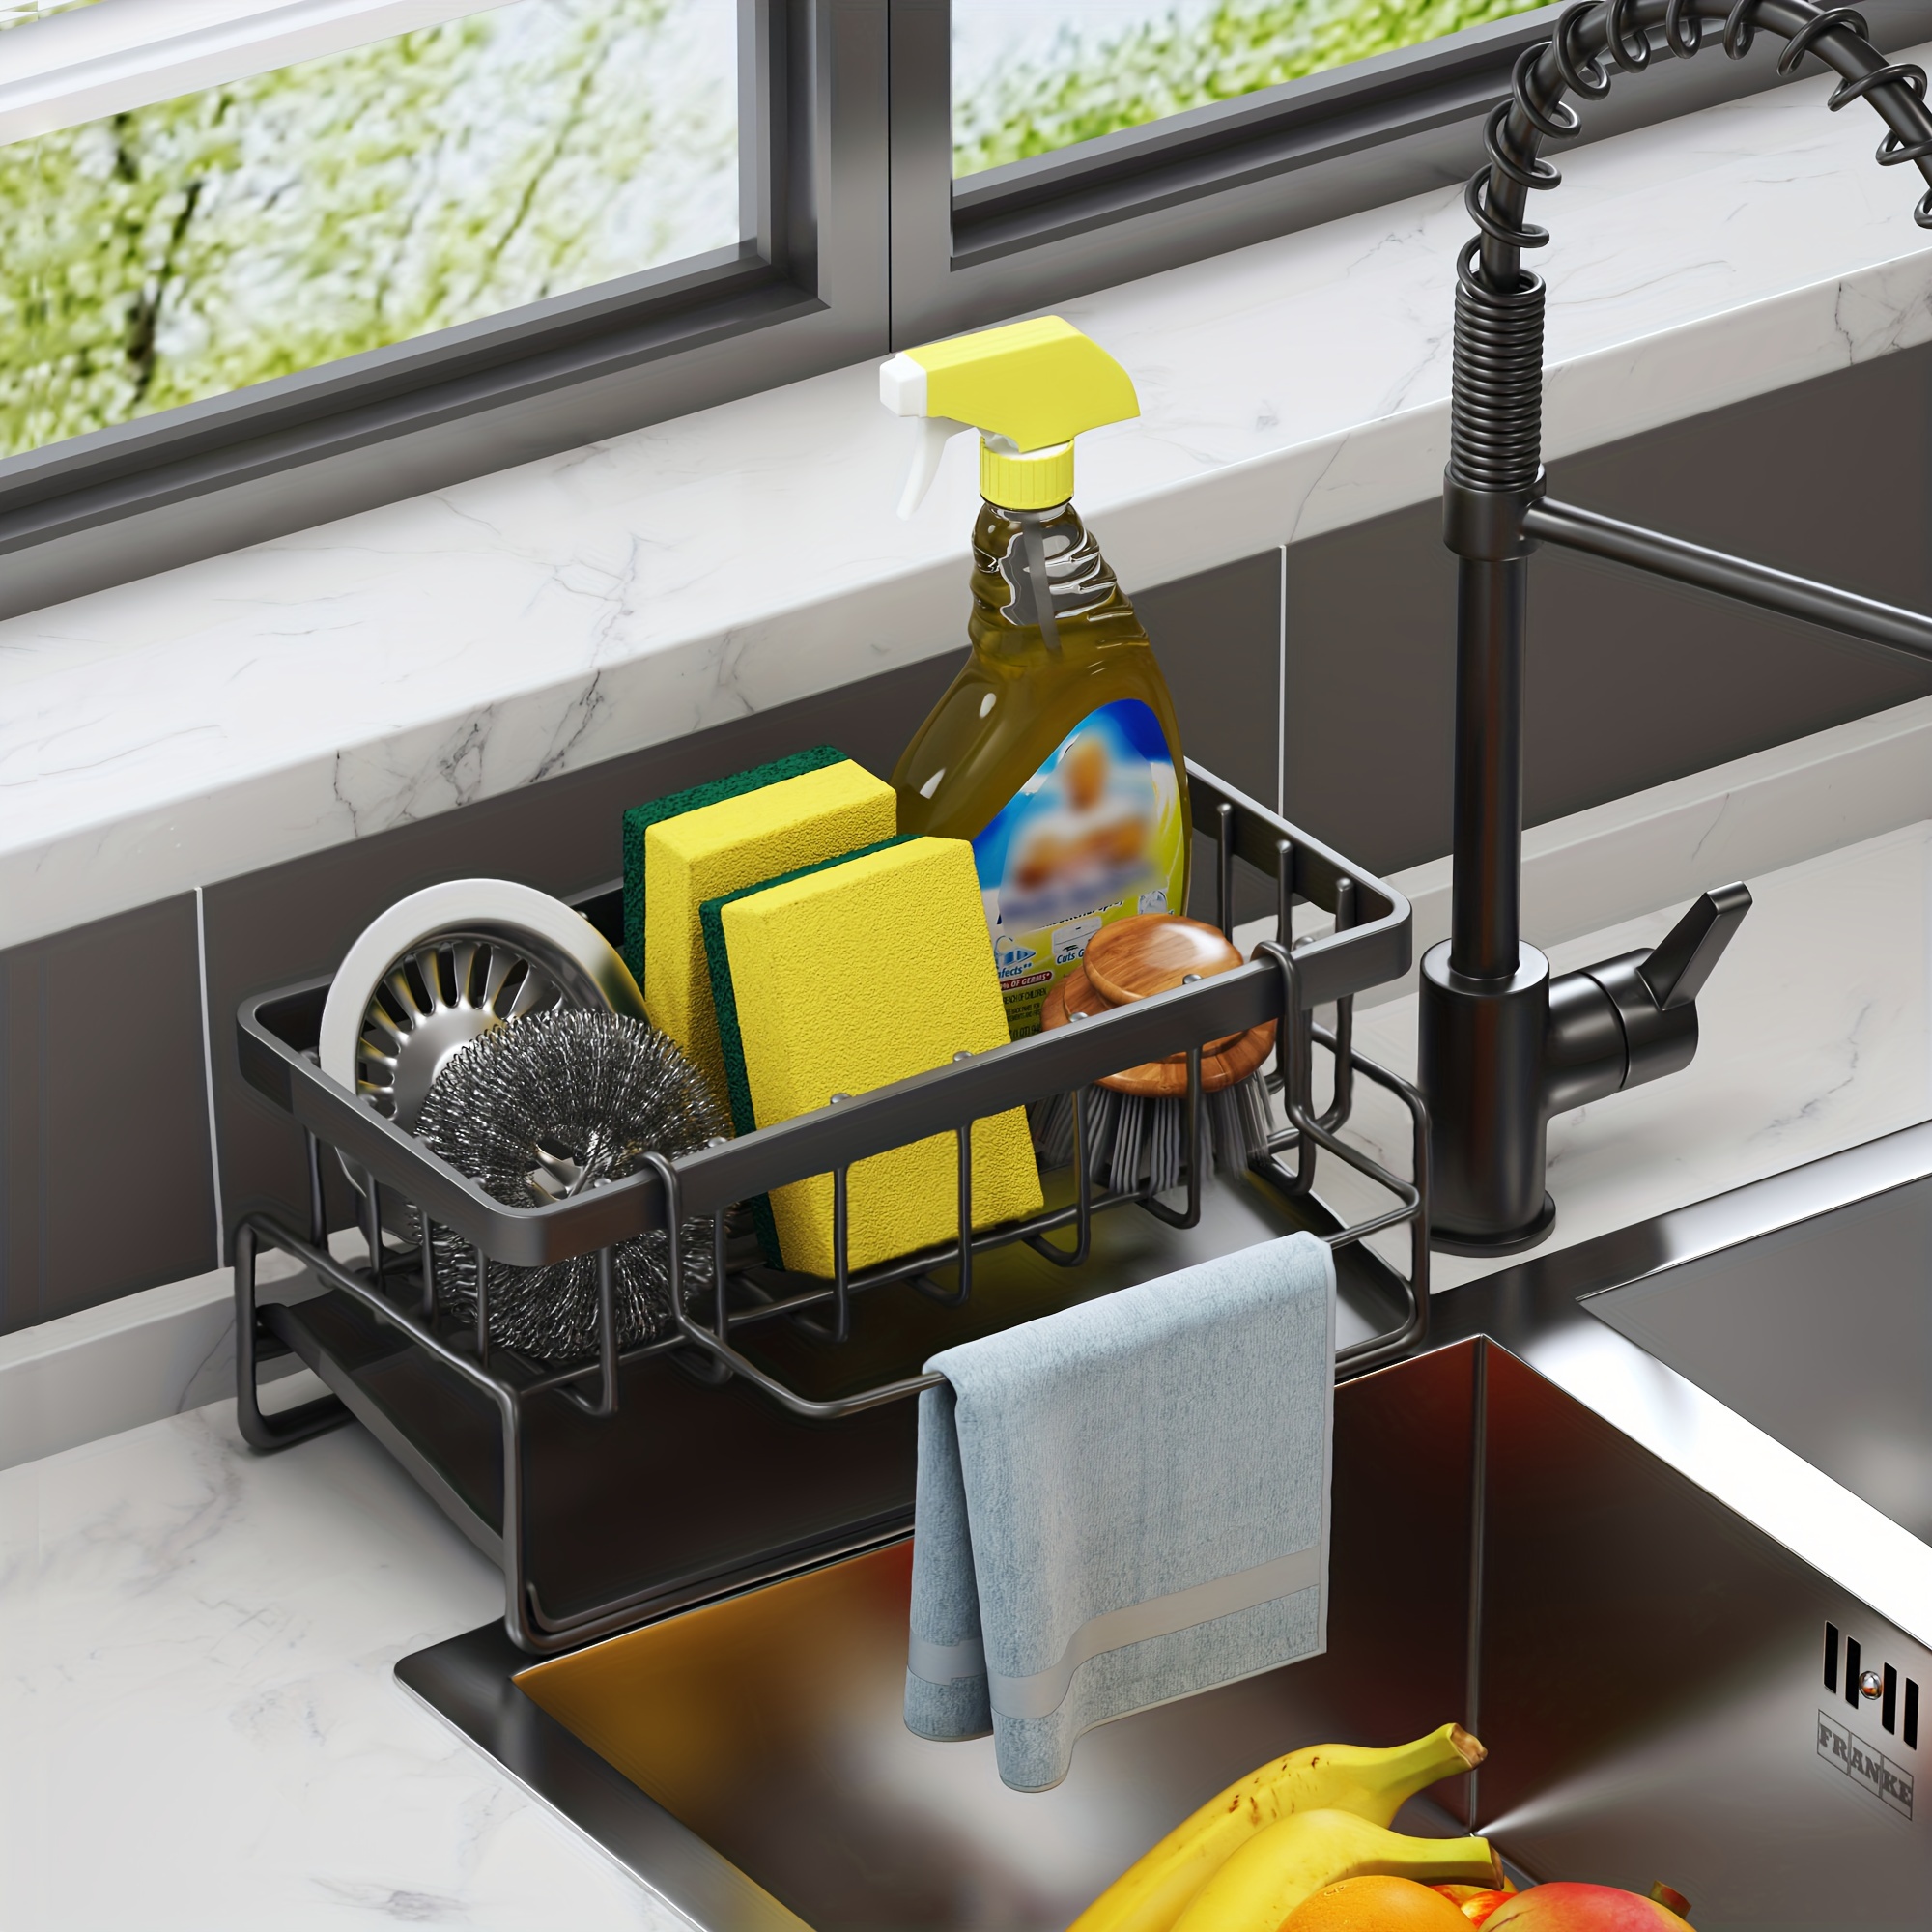 

1pc Premium Kitchen Sink Caddy - Integrated Sponge Holder - Multipurpose Kitchen Countertop Organizer For Dishcloth, Dish Soap, Brushes - Space-saving Kitchen Organizer Rack, Kitchen Accessories